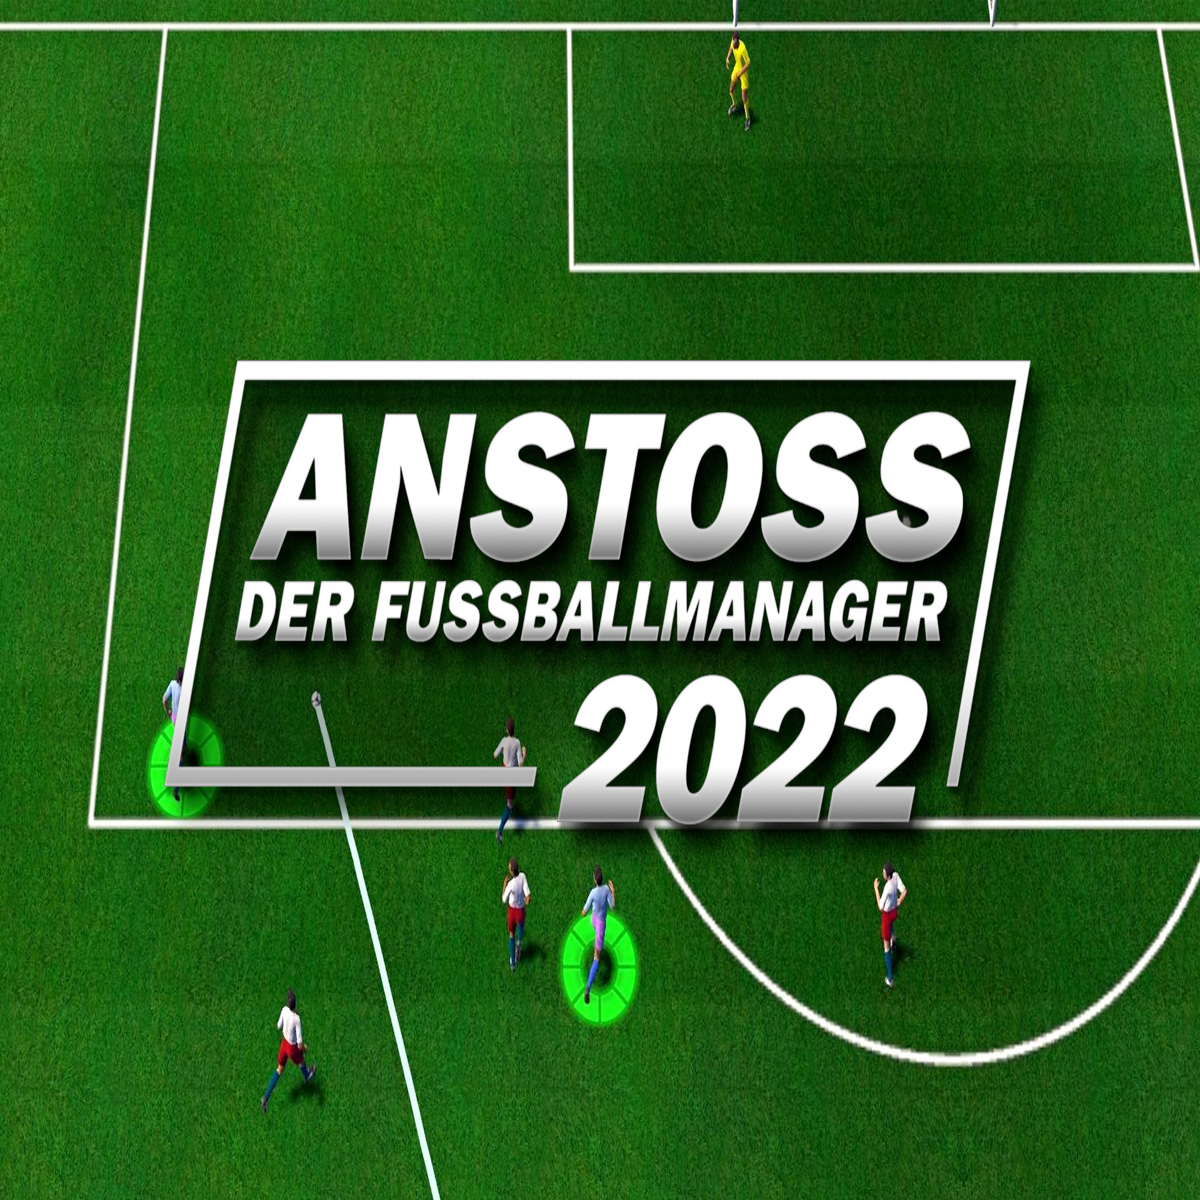 Anstoss 2022 heißt jetzt nur noch Anstoss - Der Fussballmanager: Rückkehr  des PC-Klassikers im Oktober